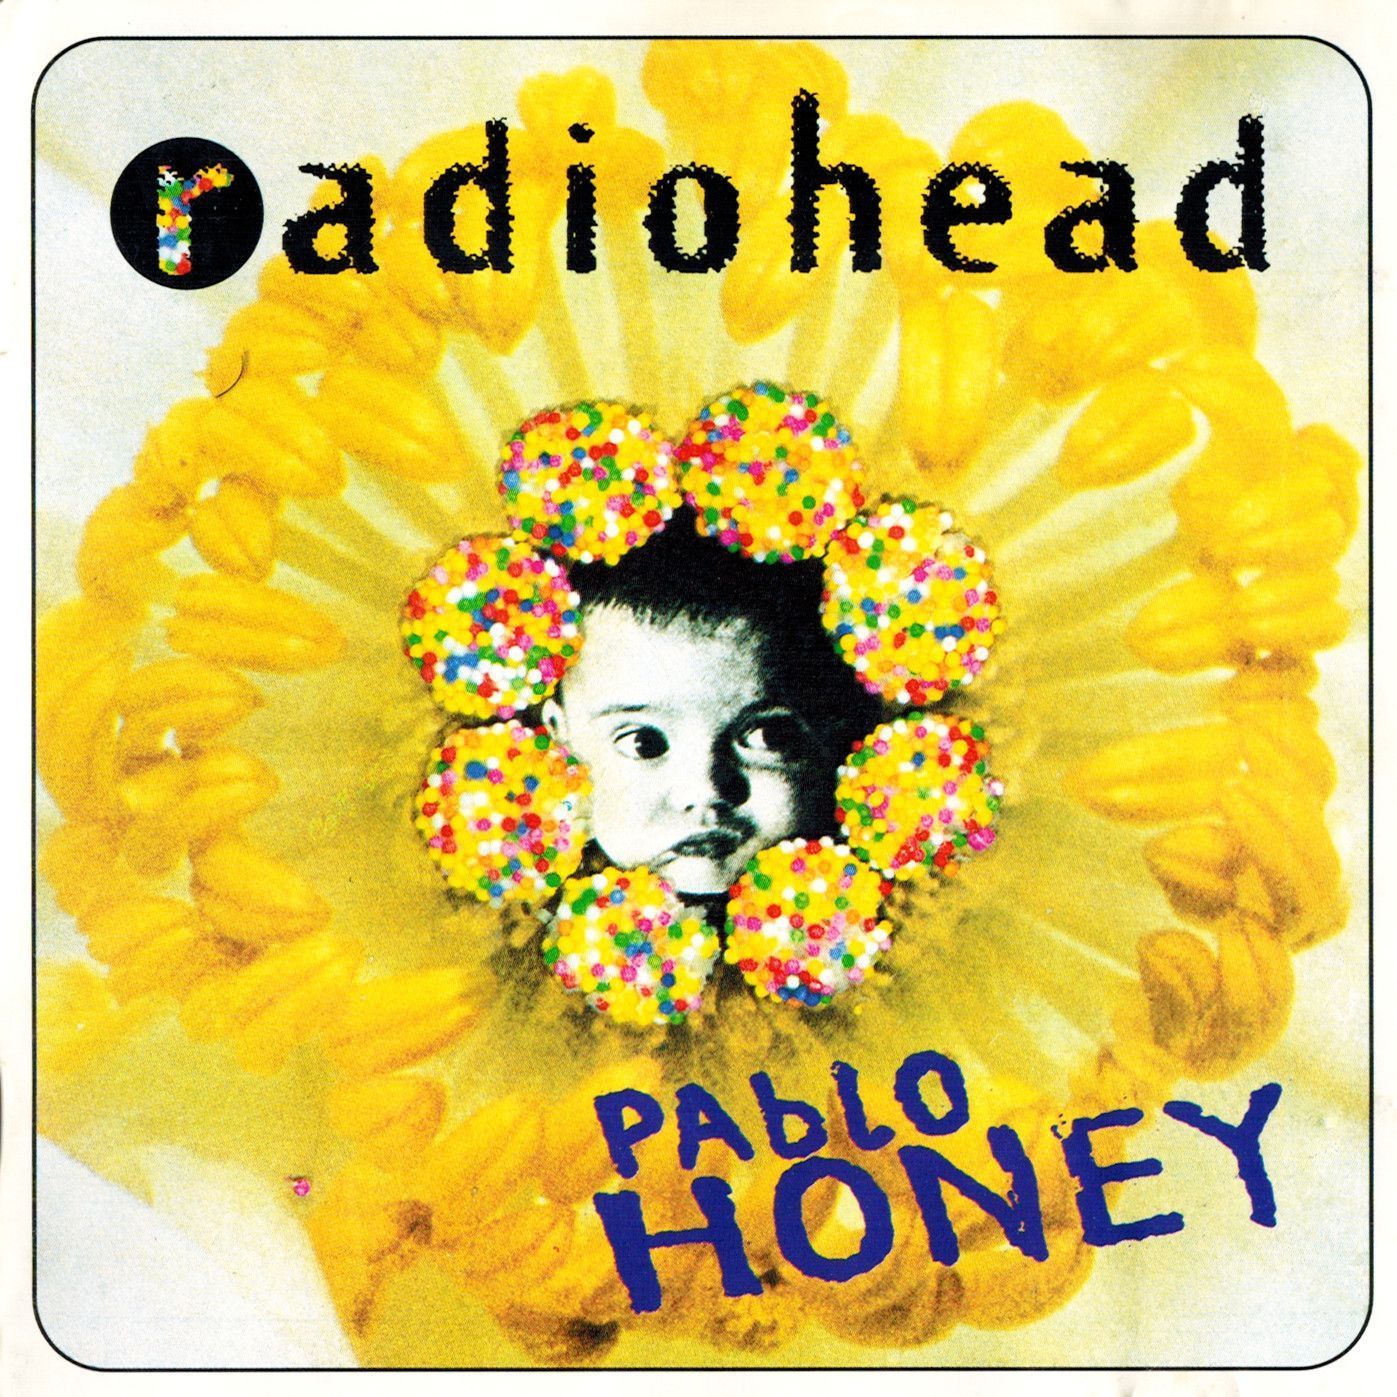 radiohead виниловая пластинка radiohead pablo honey CD диск Pablo Honey | Radiohead